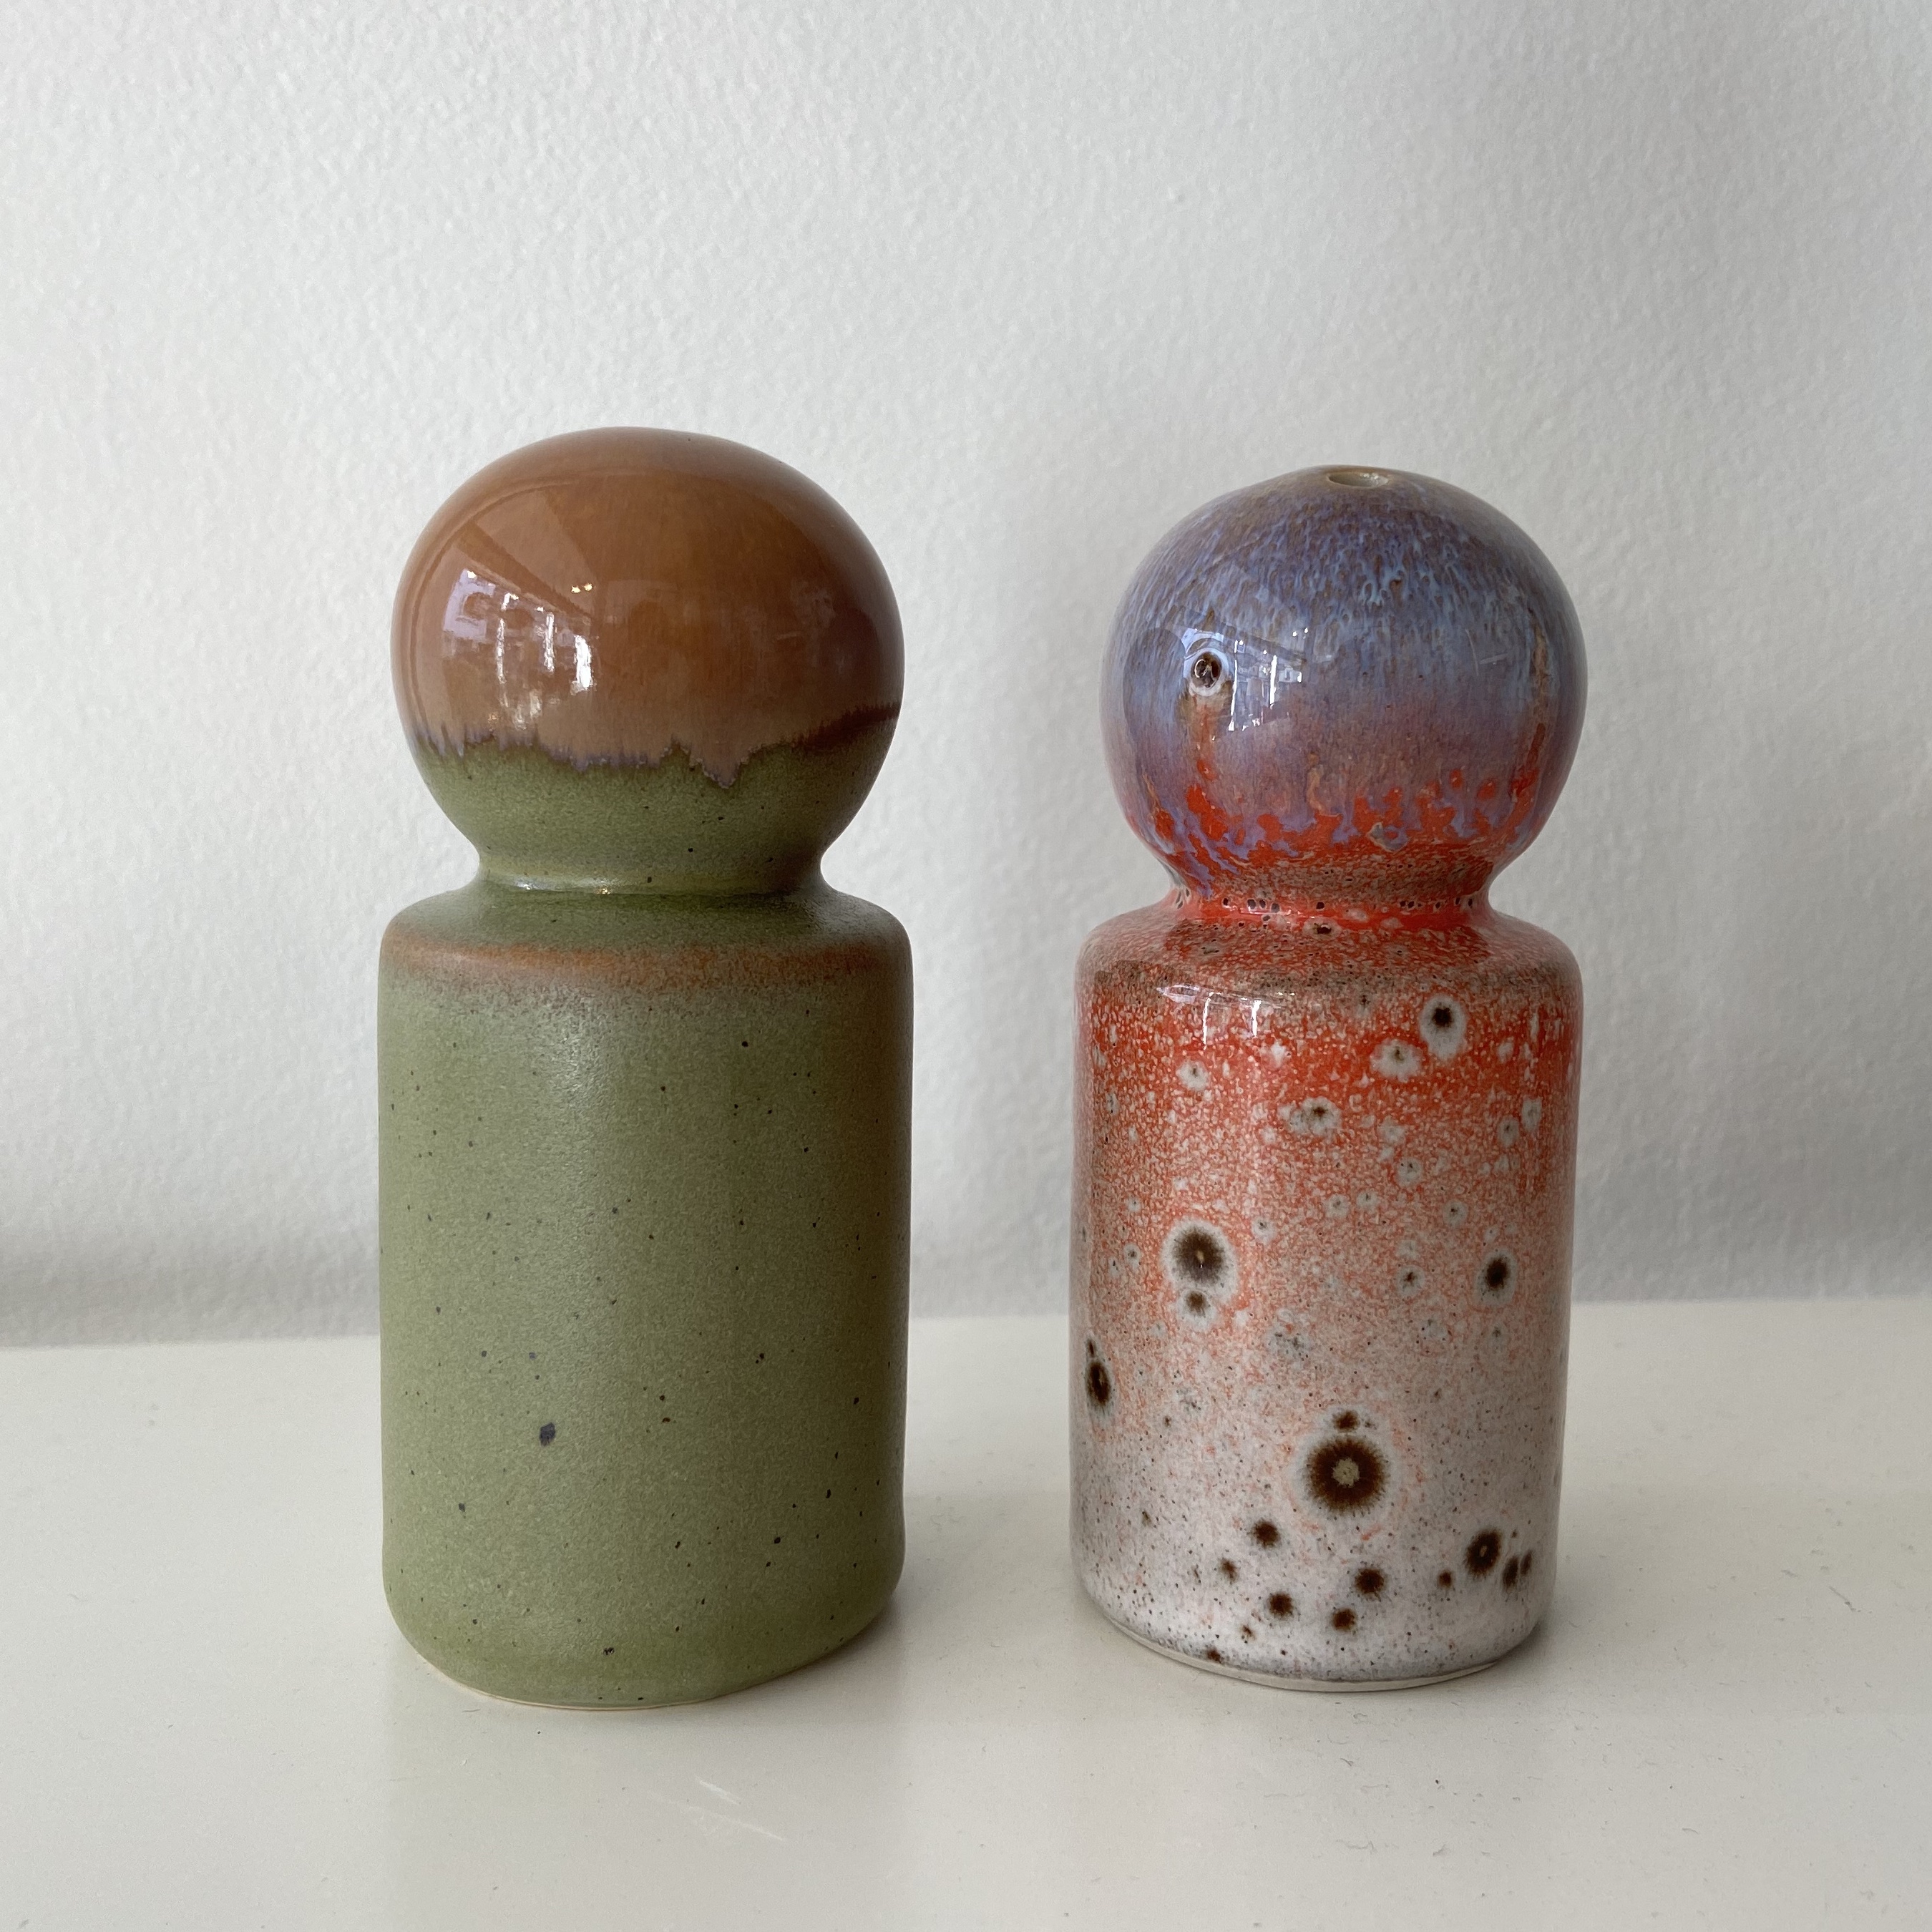 70's Ceramic Salt And Pepper Shakers